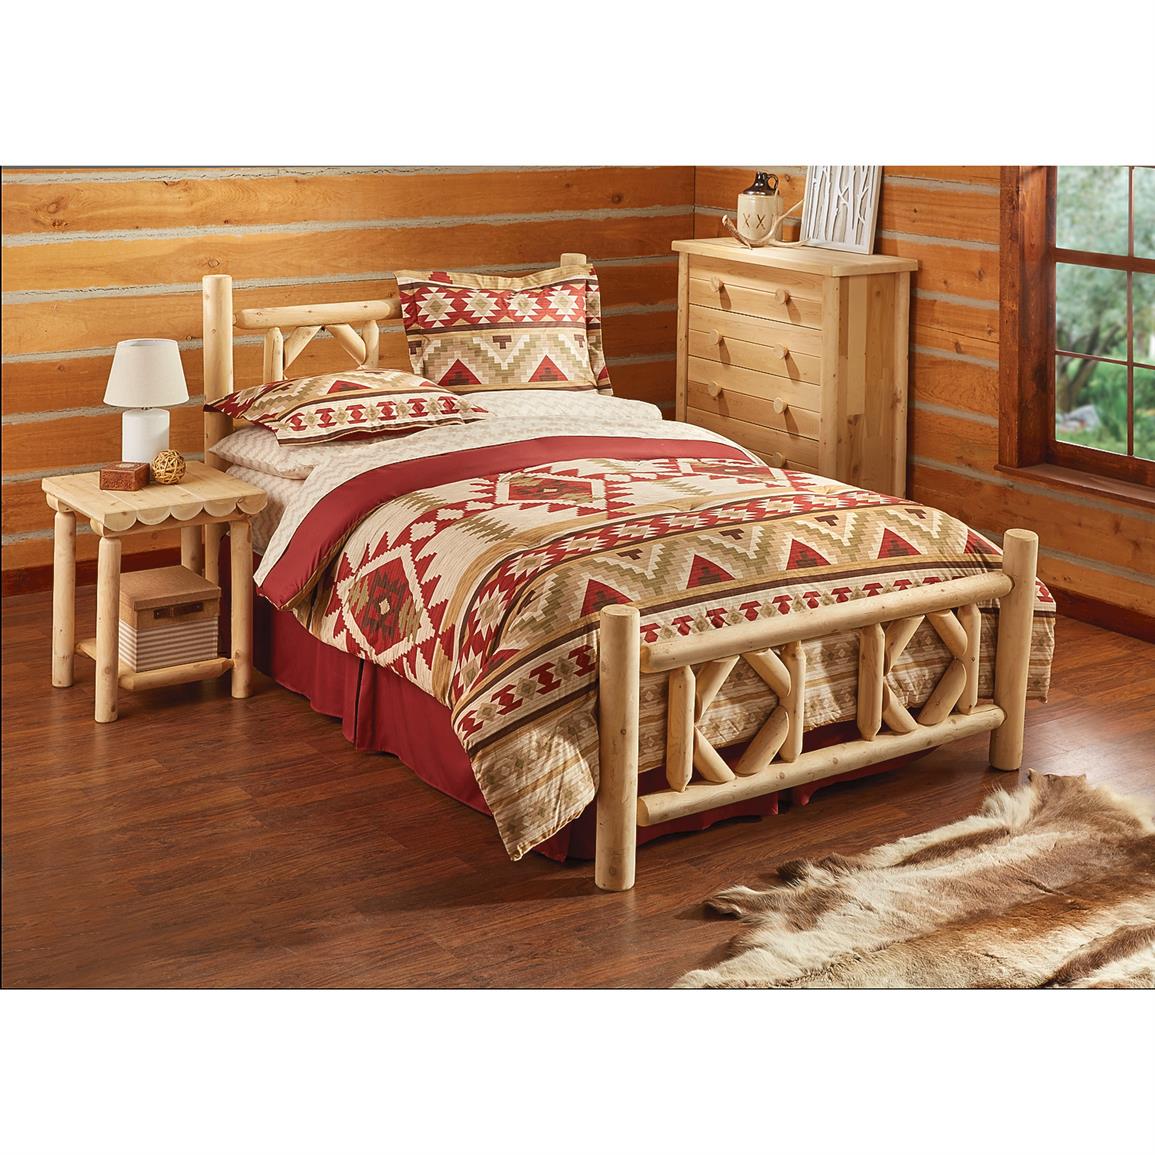 CASTLECREEK Diamond Cedar Log Bed, Queen - 297898, Bedroom Sets at